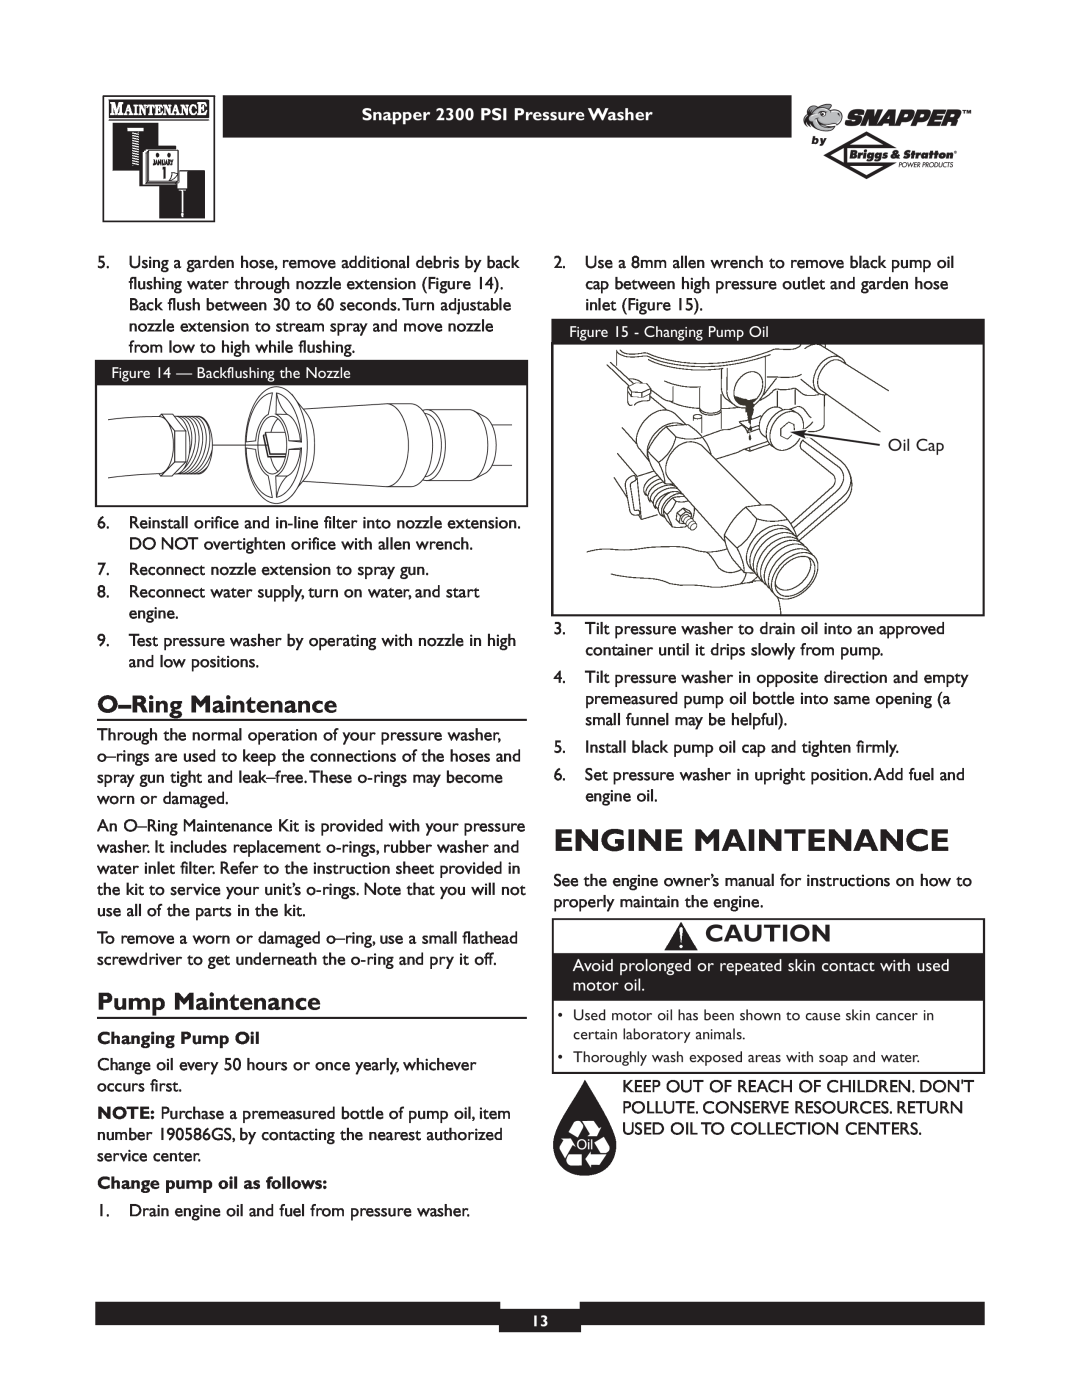 Snapper 1807-1 Engine Maintenance, O-Ring Maintenance, Pump Maintenance, Changing Pump Oil, Change pump oil as follows 